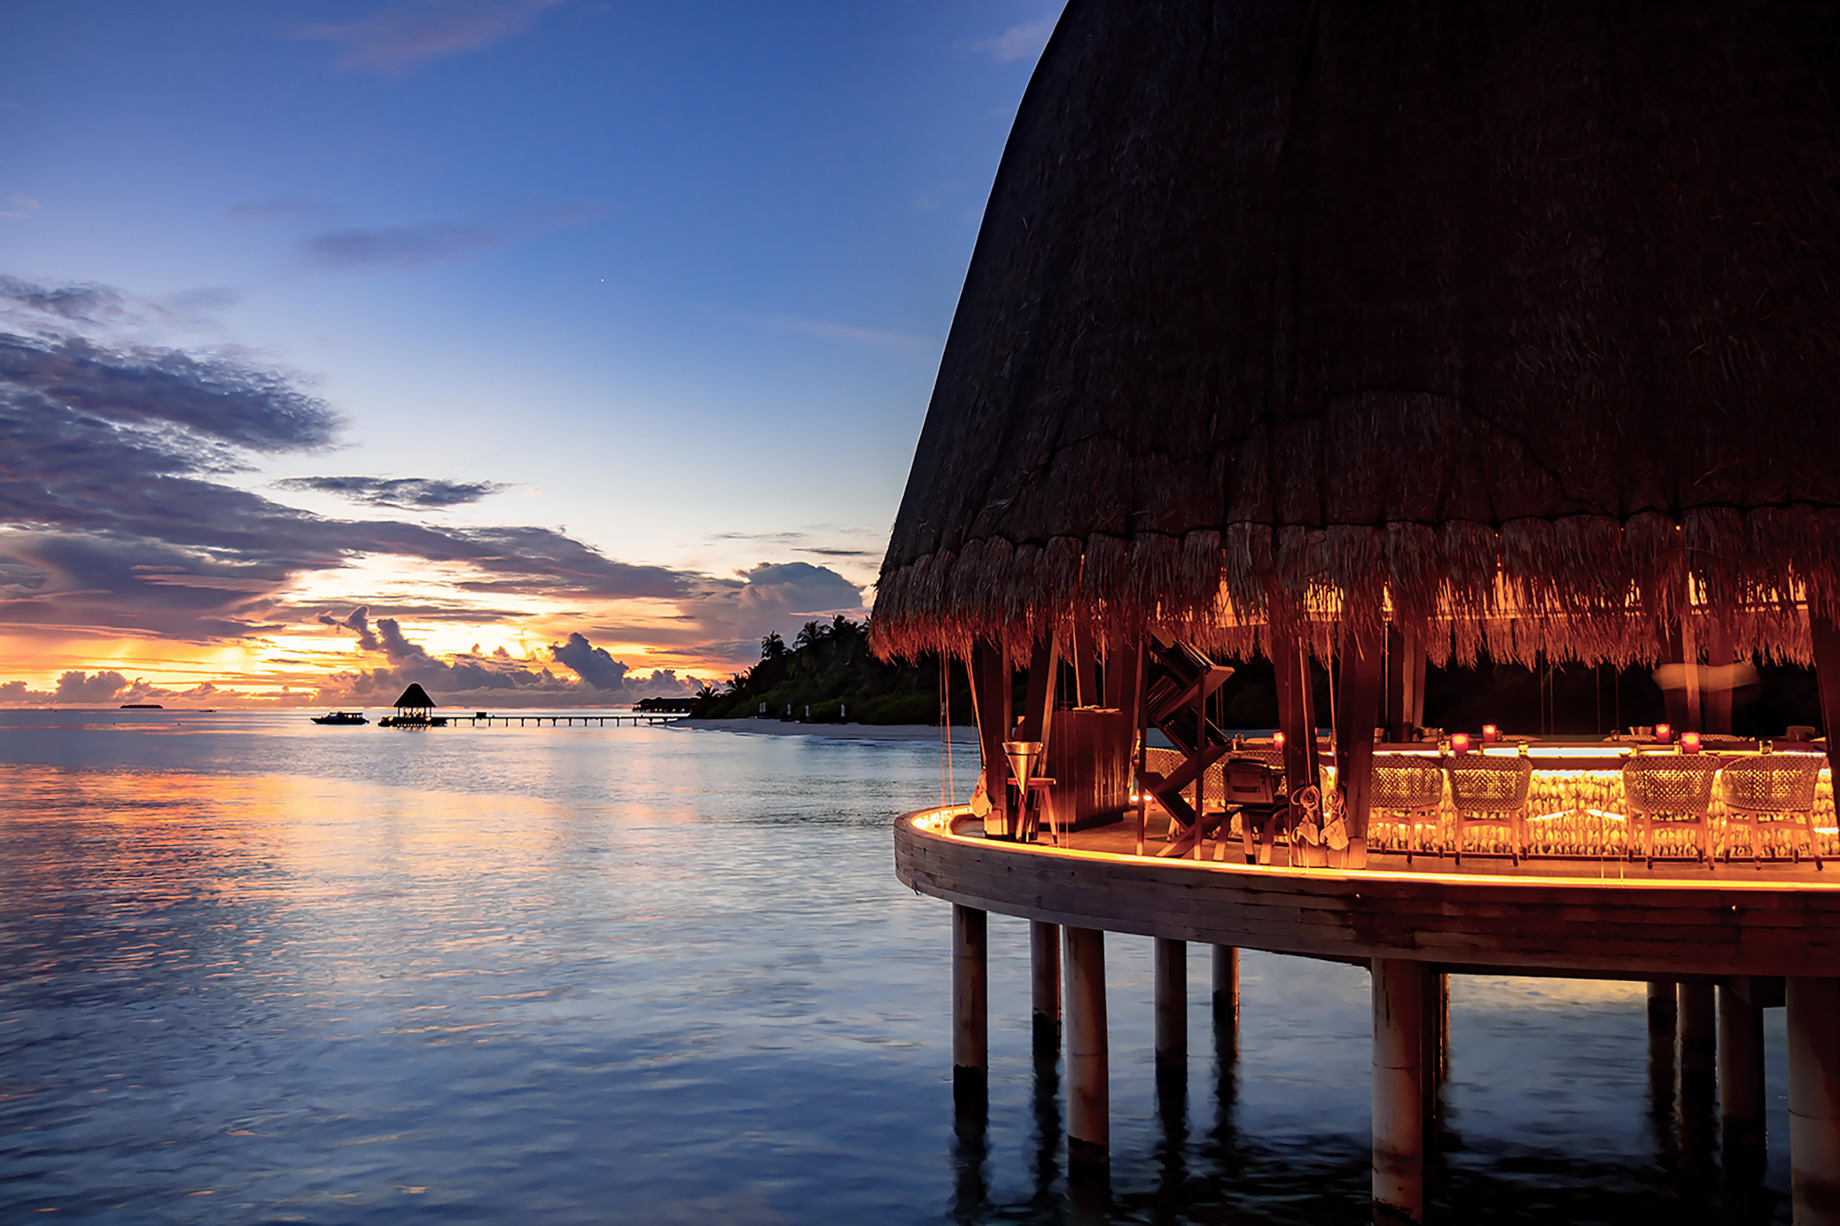 Anantara Kihavah Maldives Villas Resort - Baa Atoll, Maldives - FIRE Restaurant Sunset Ocean View